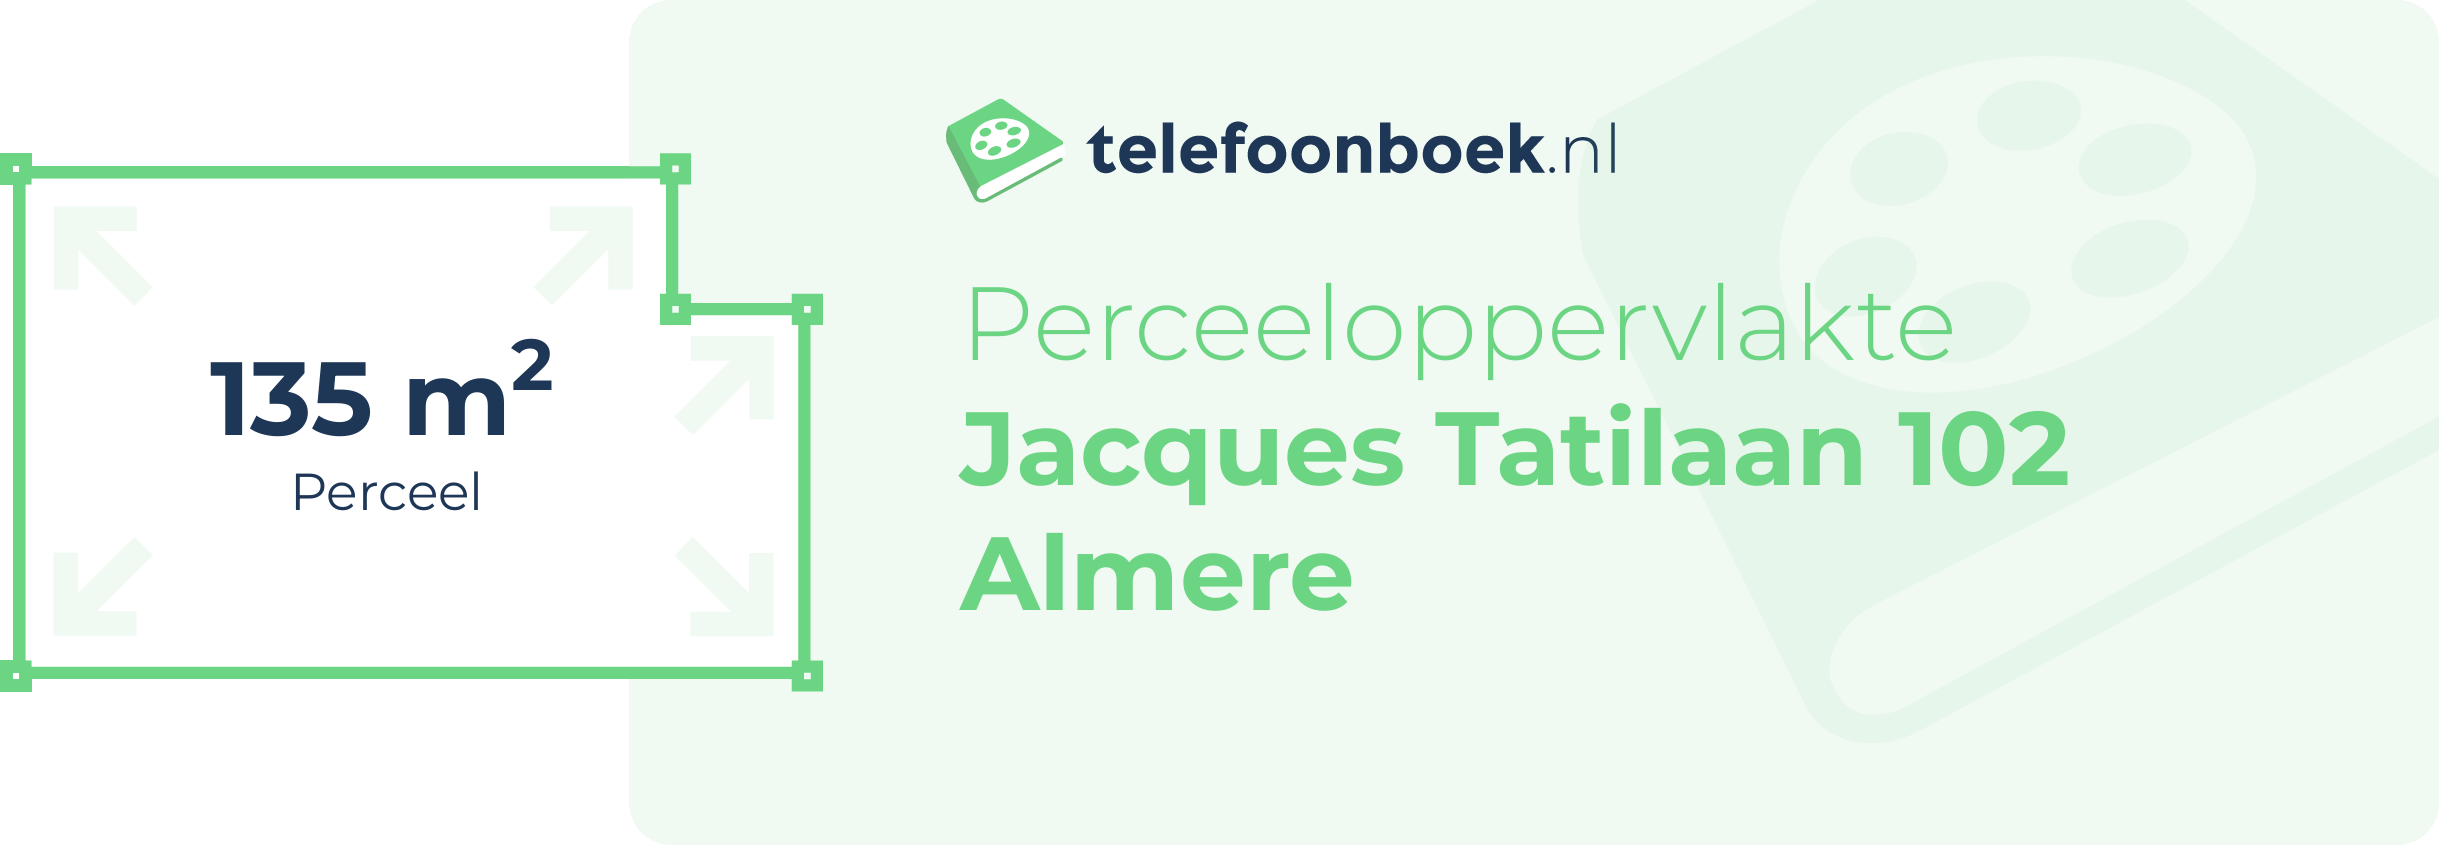 Perceeloppervlakte Jacques Tatilaan 102 Almere